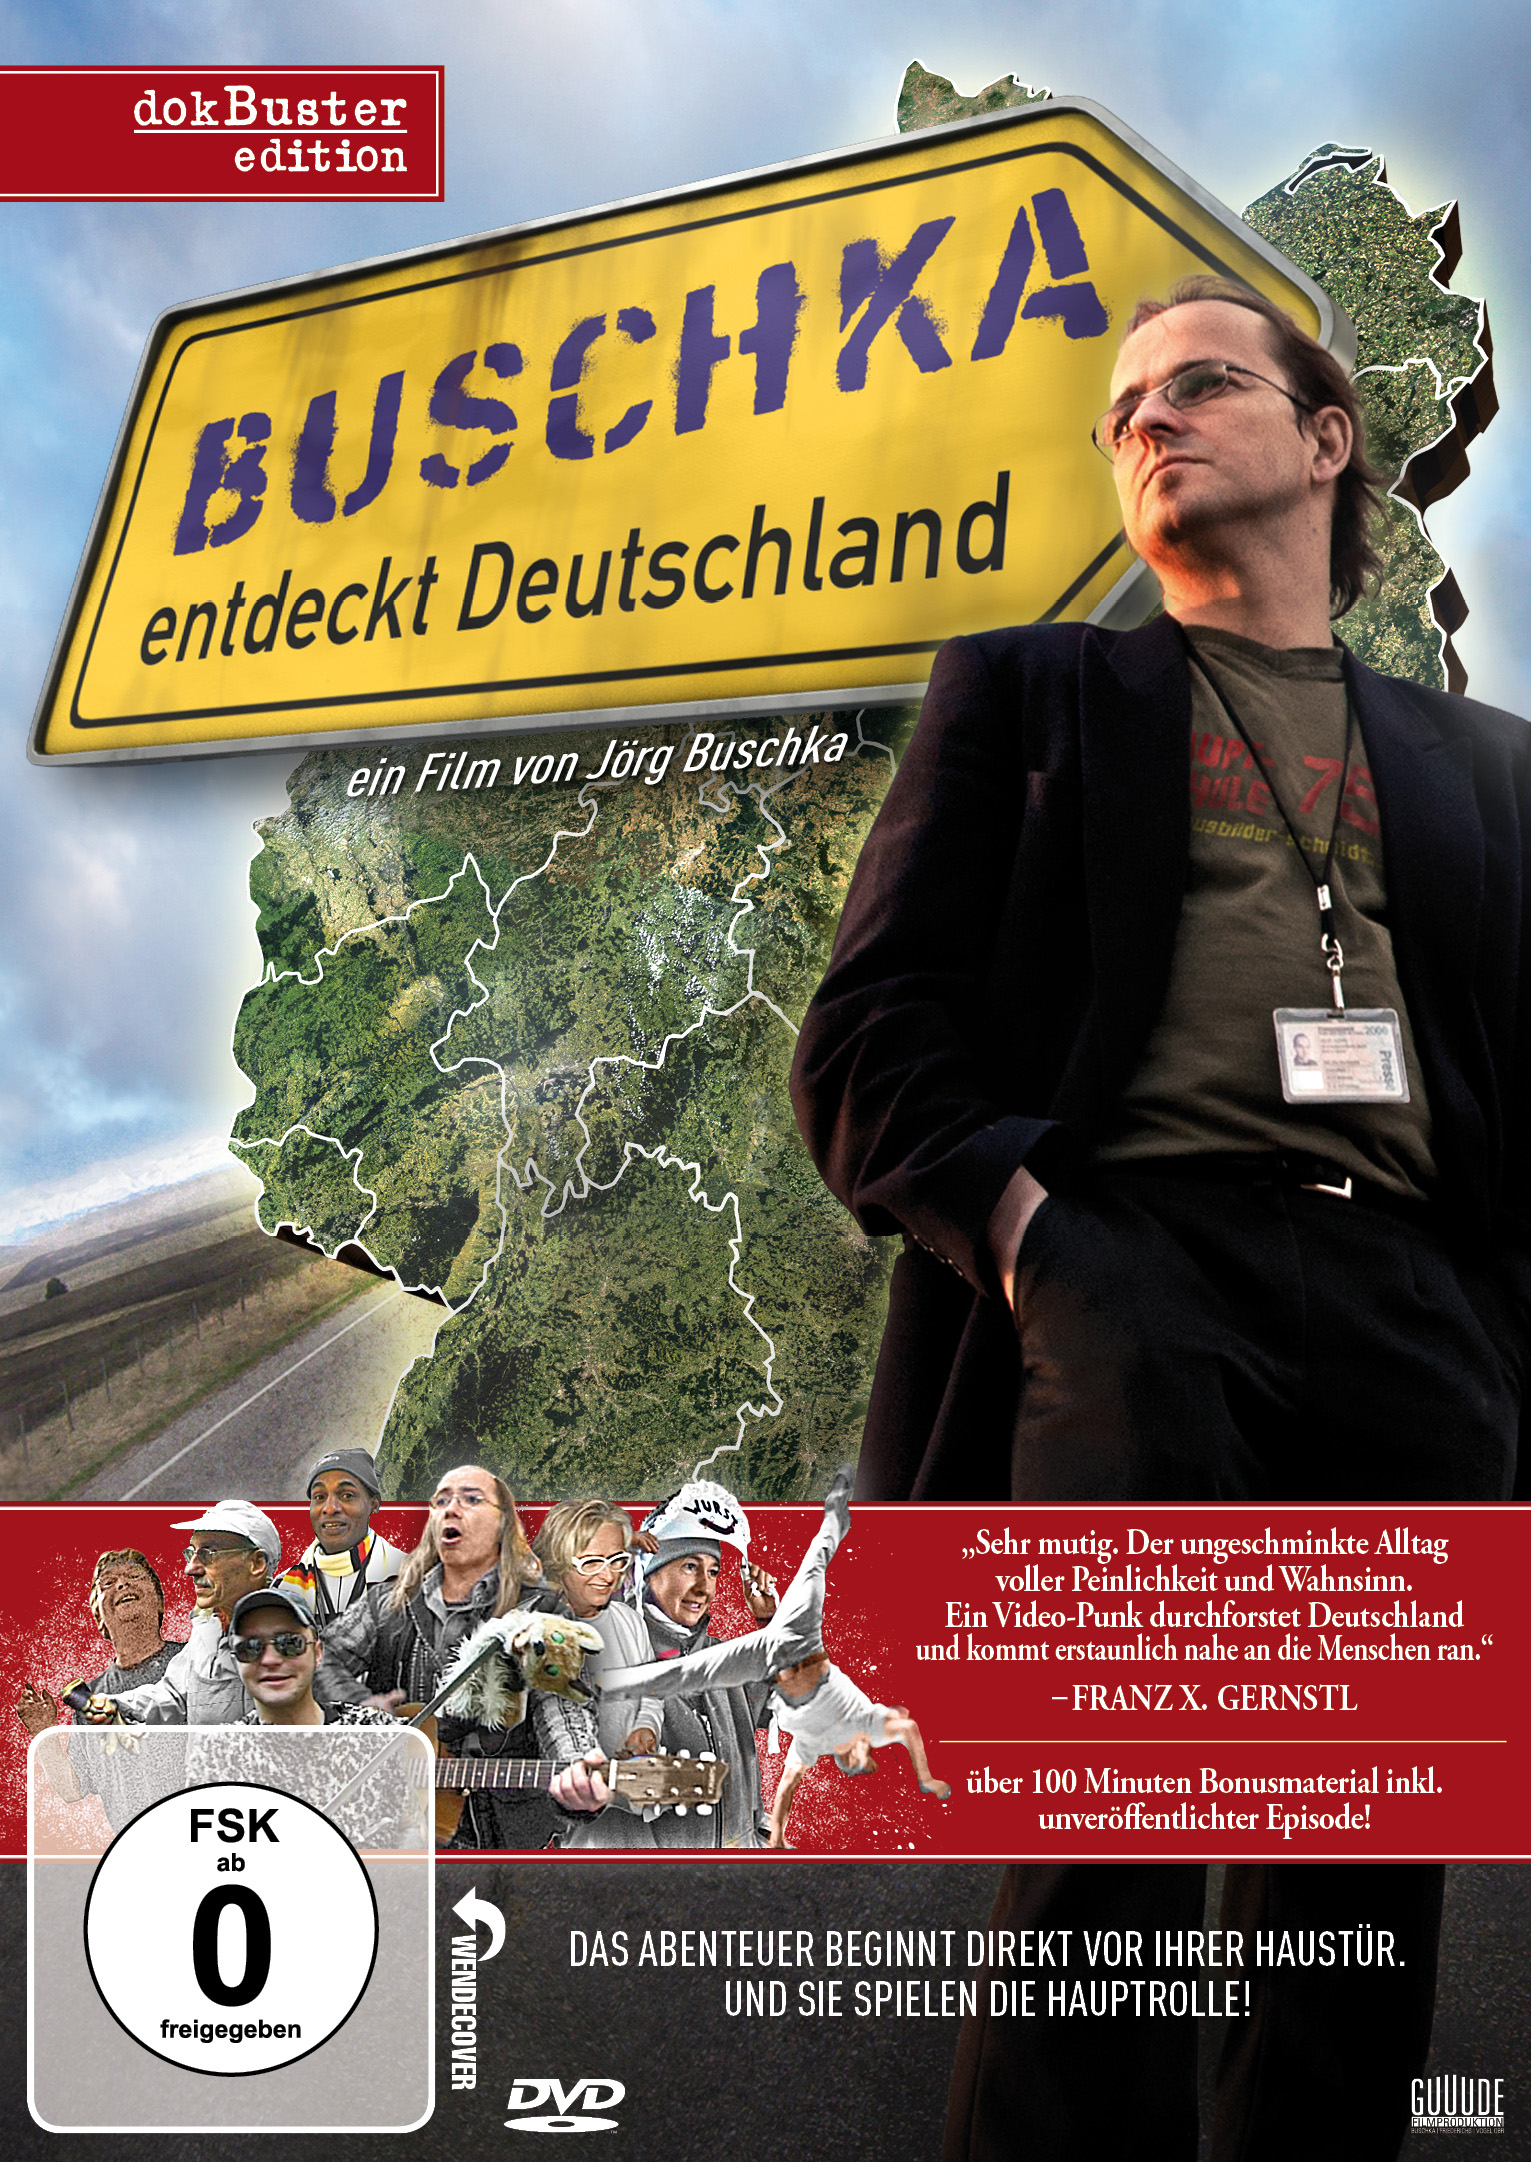 Buschka entdeckt Deutschland (dokBuster)